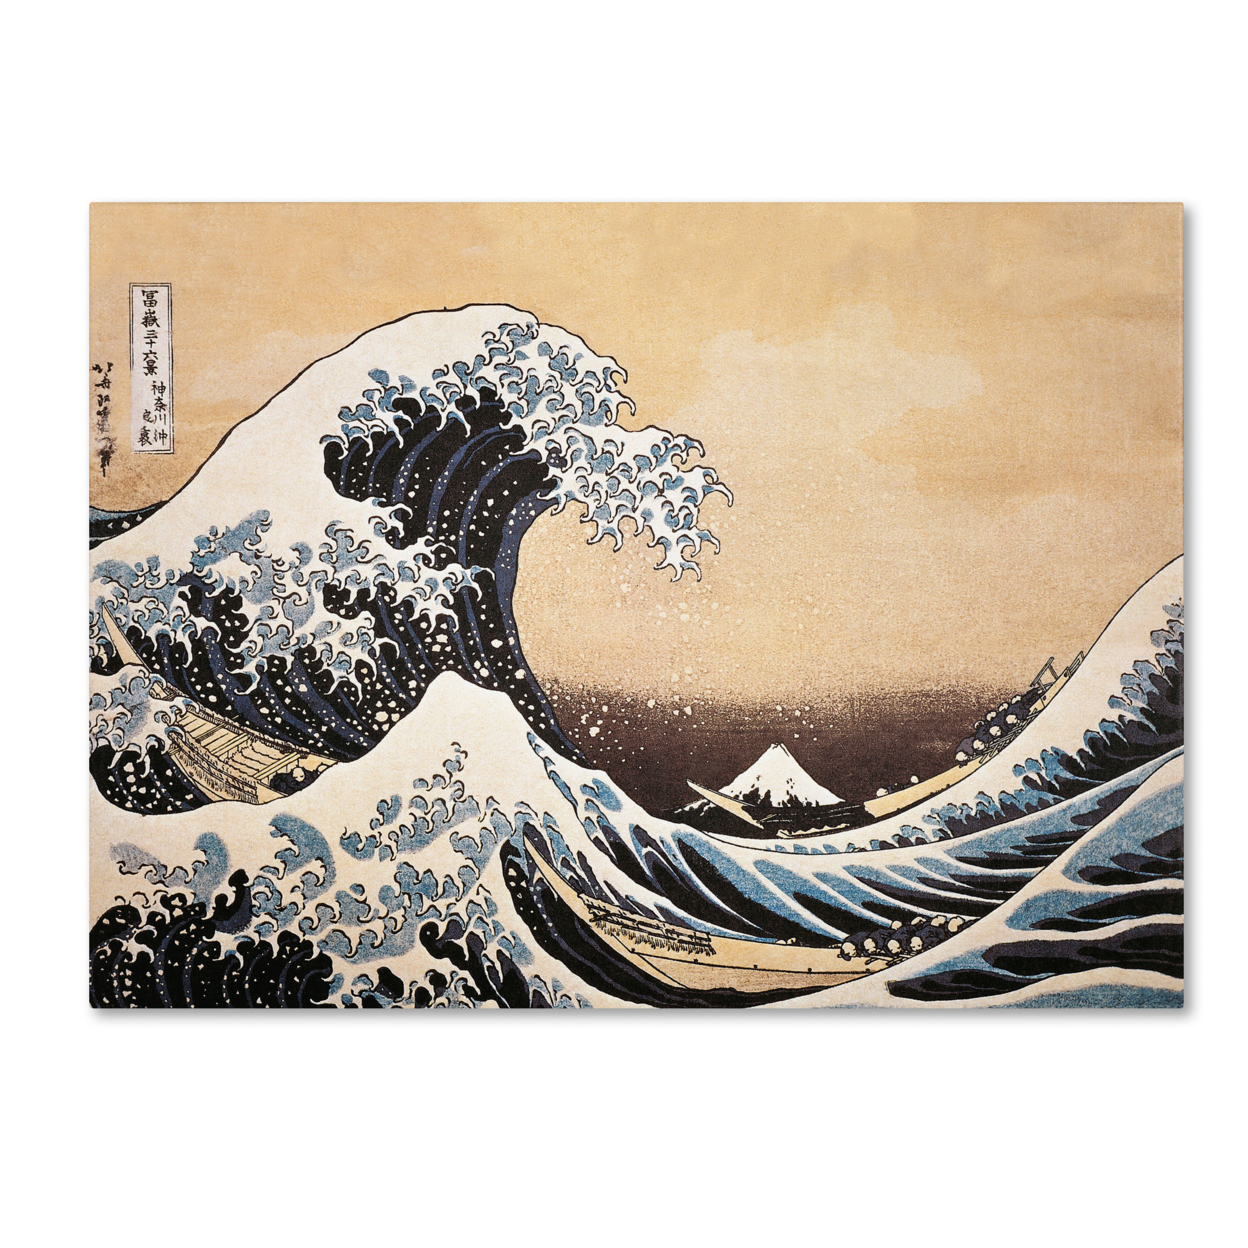 Katsushika Hokusai 'The Great Wave Off Kanagawa' Canvas Wall Art 35 X 47 Inches